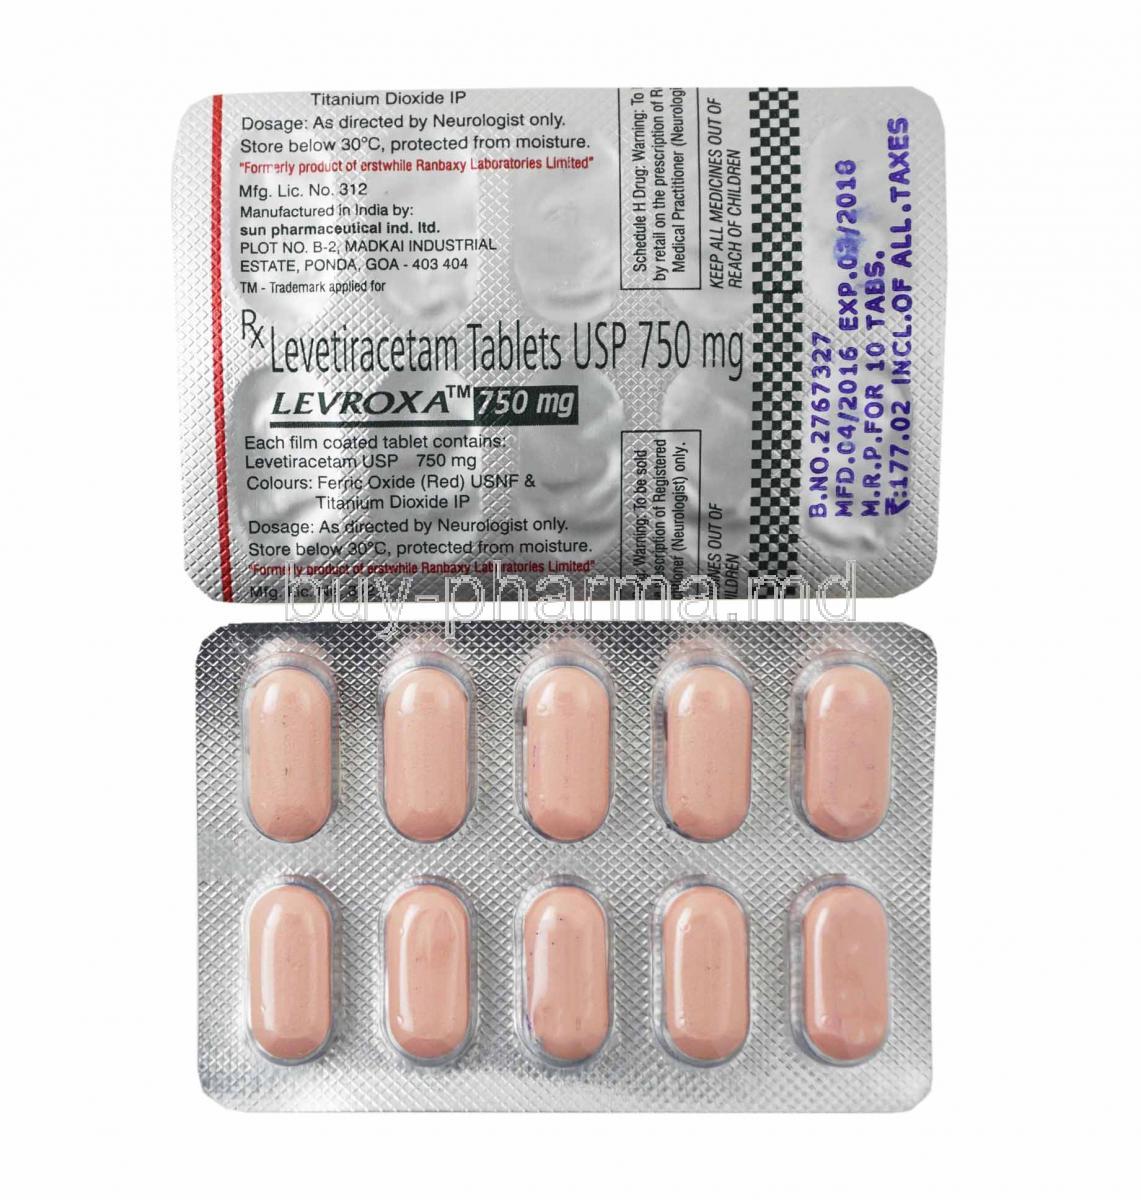 Levroxa, Levetiracetam 750mg tablets